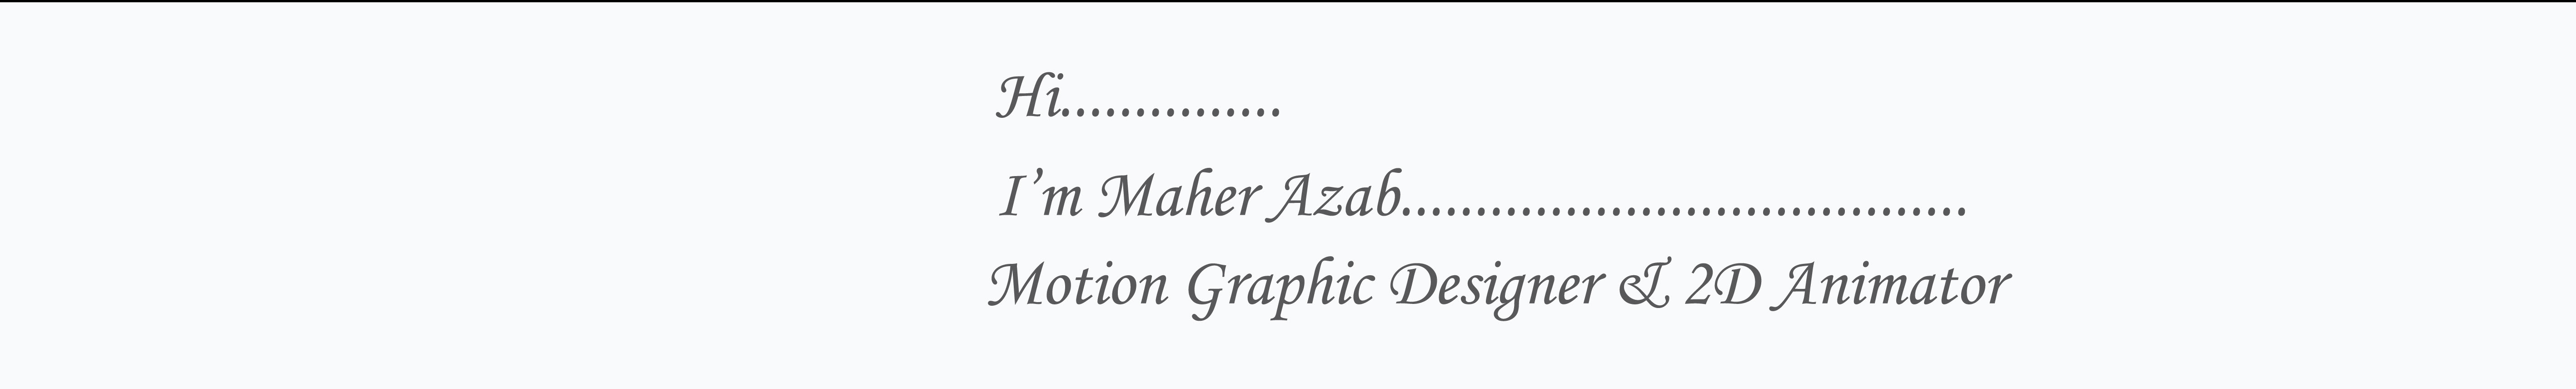 Profielbanner van Maher Azab